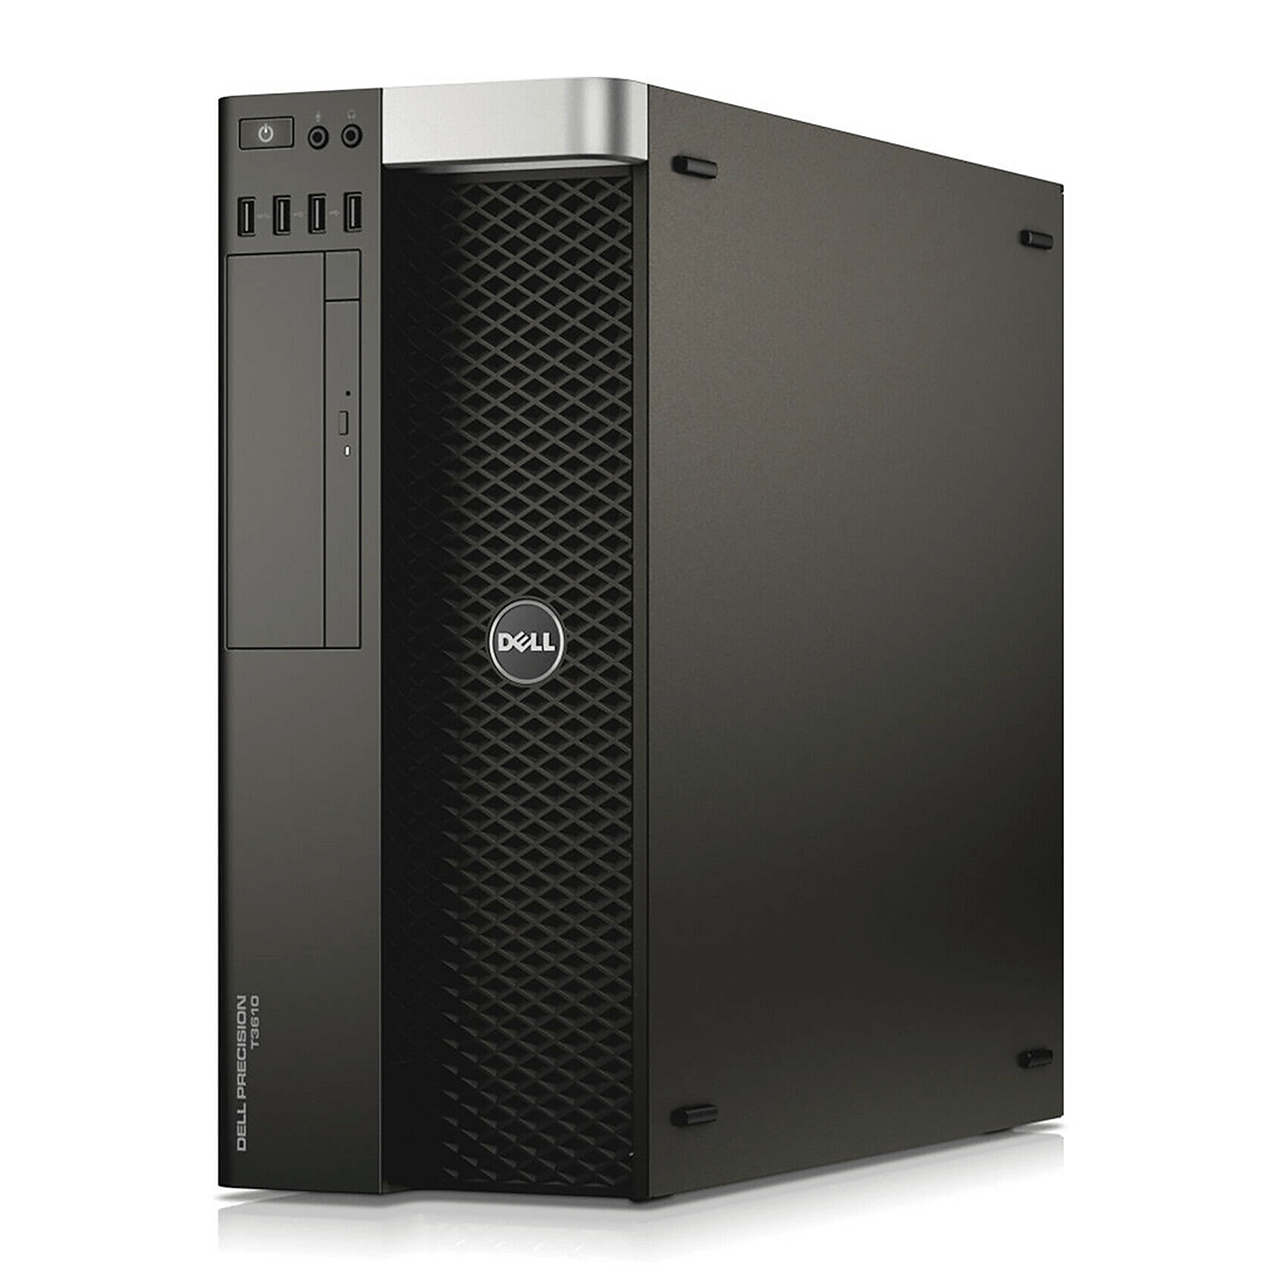 Dell Precision T3610 Tower - Intel Xeon E5-1650 v2 (3.50 GHz) 6C - 16GB  DDR3 - 1x 512GB SSD - NVIDIA Quadro K600 (1GB DDR3) - Windows 10  Professional 